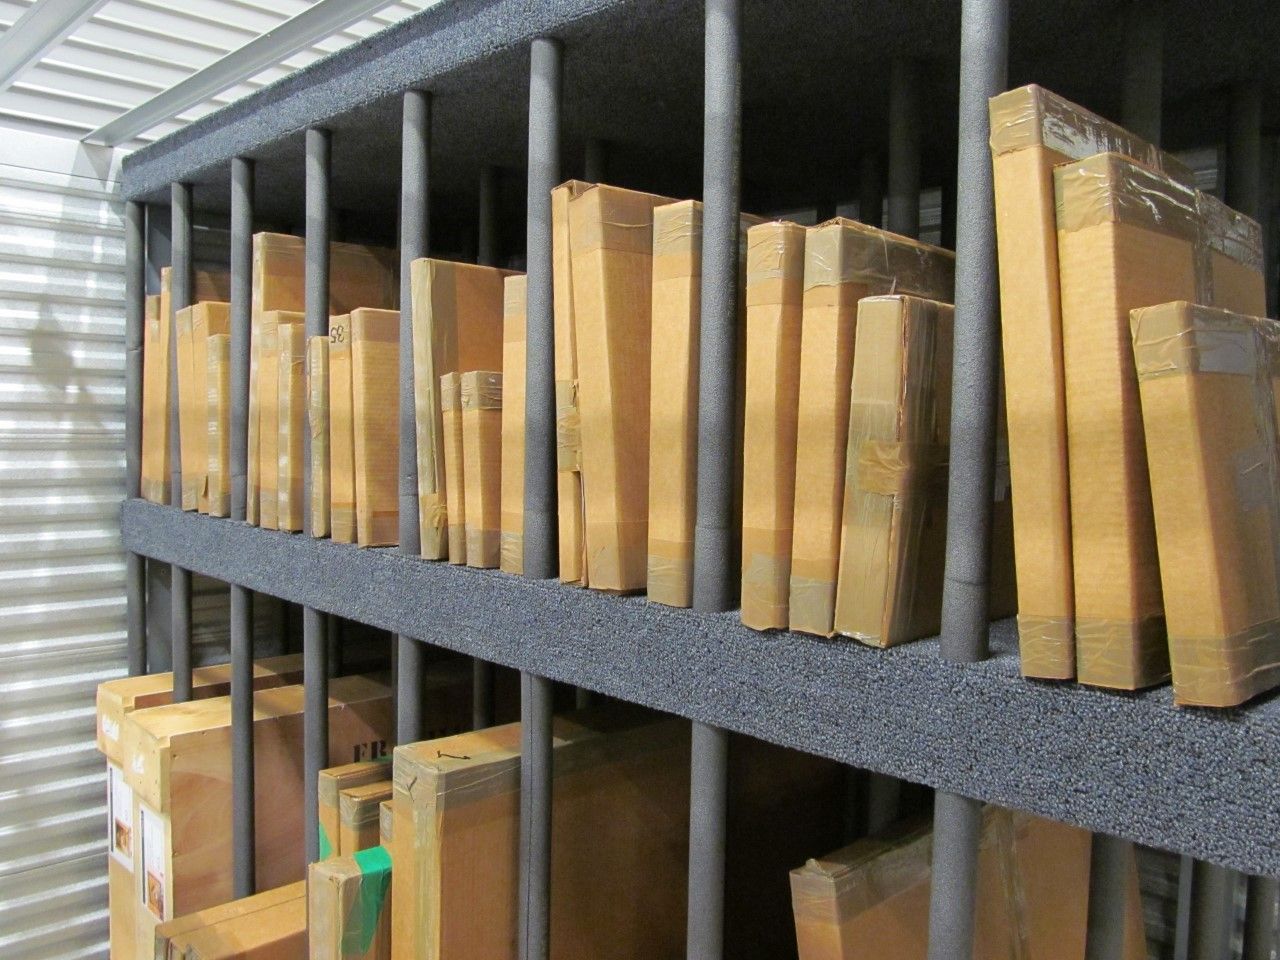 image of large, nondescript cardboard boxes on orange, metal shelving